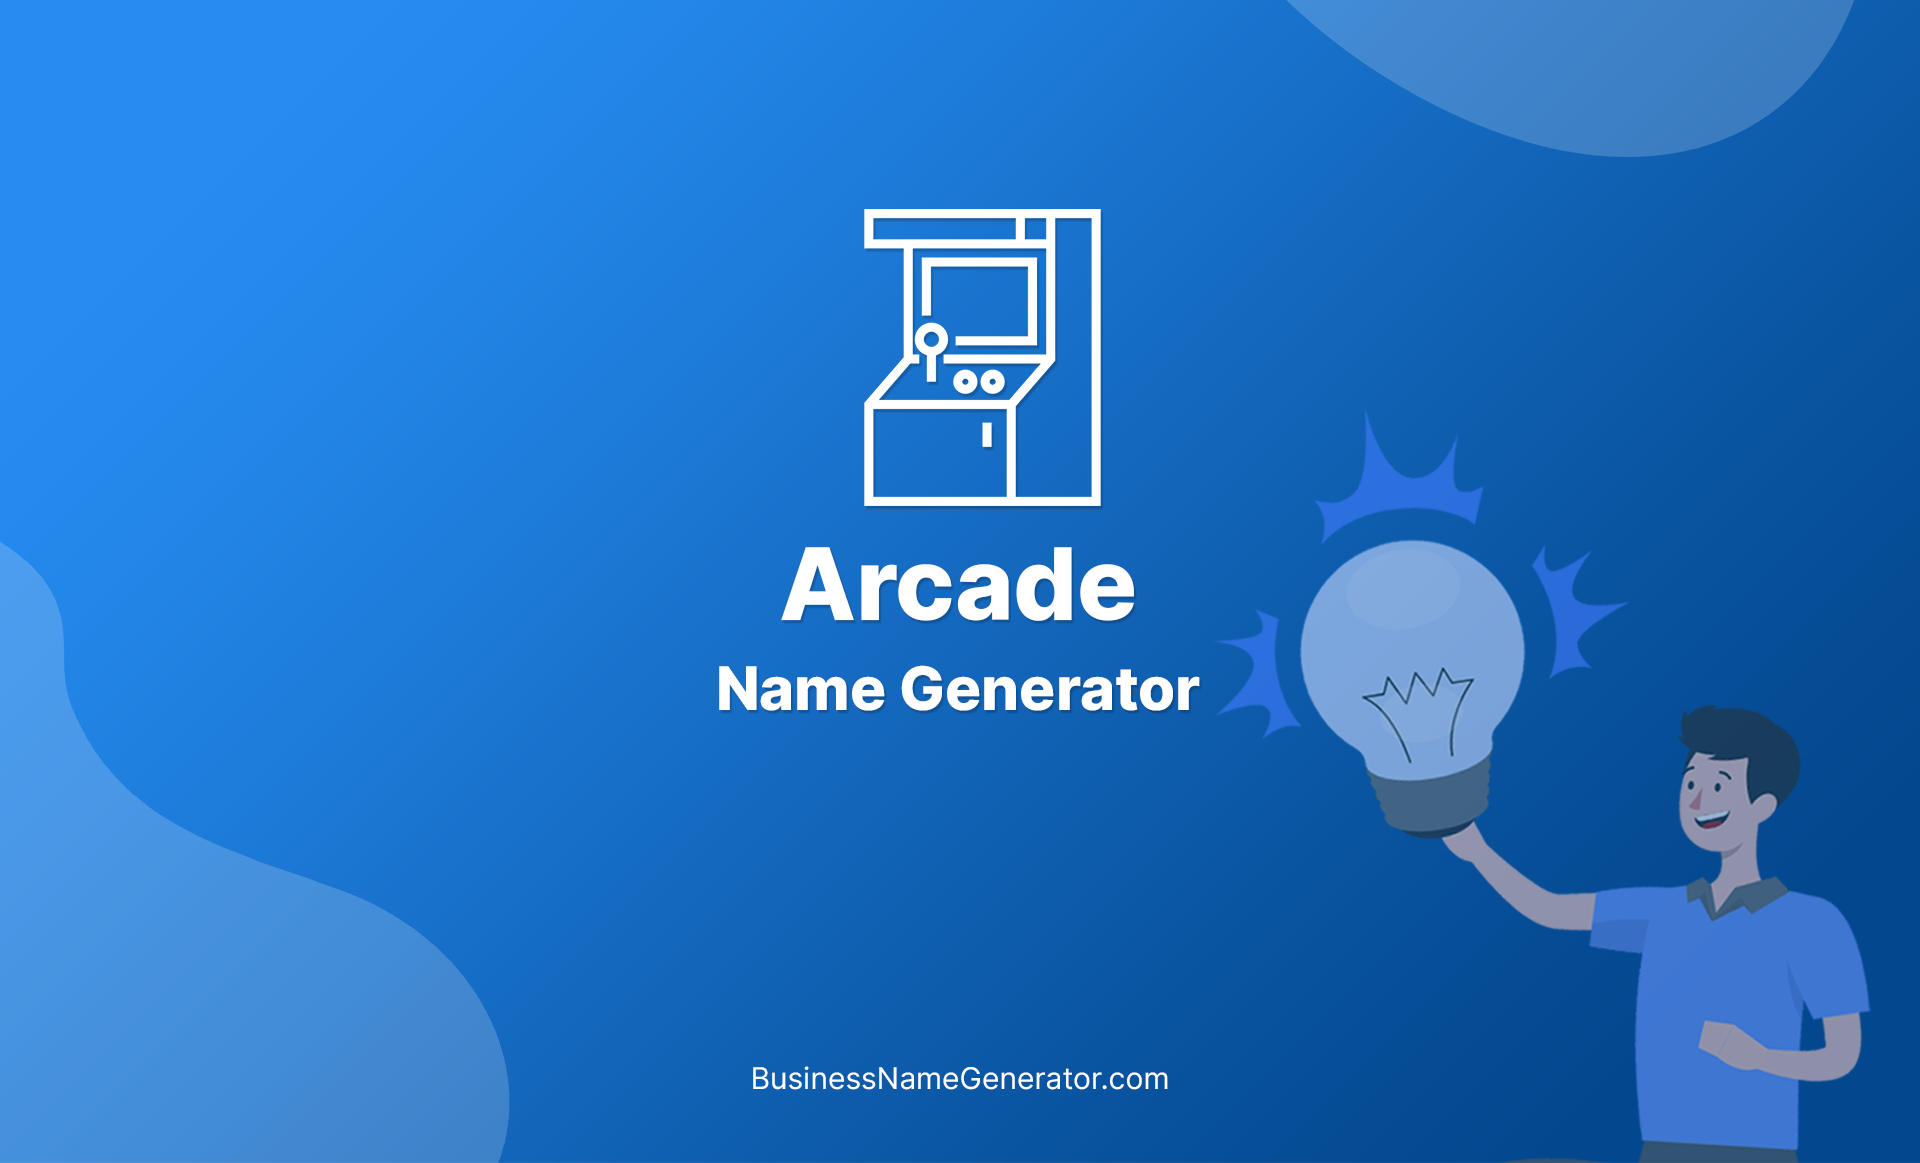 Arcade Name Generator